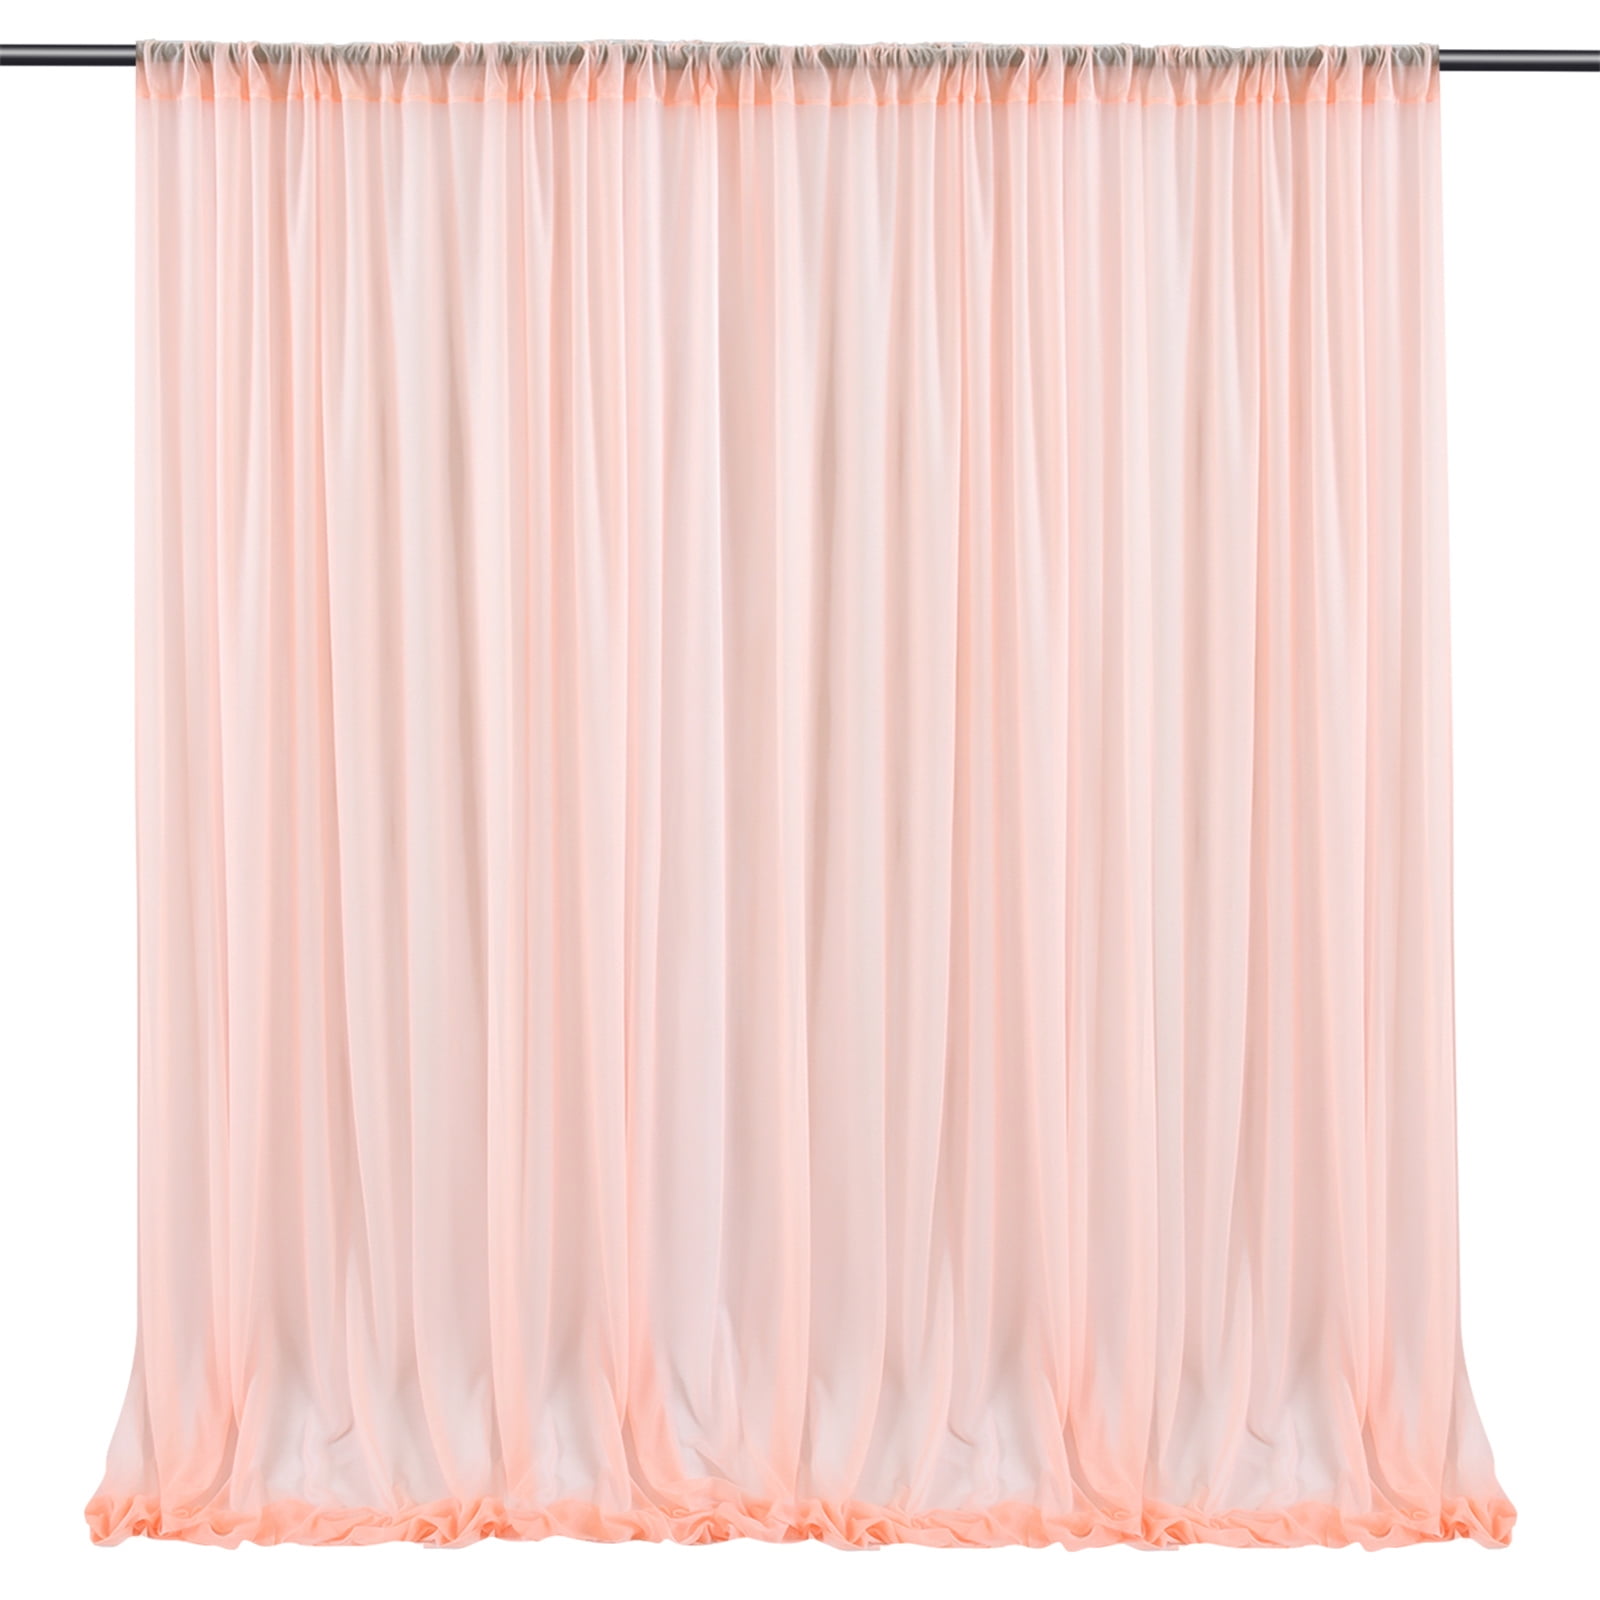 SKY CANDYBAR 10 Meters Glass Crystal Beads Curtain Window Door Curtain  Passage Wedding Backdrop